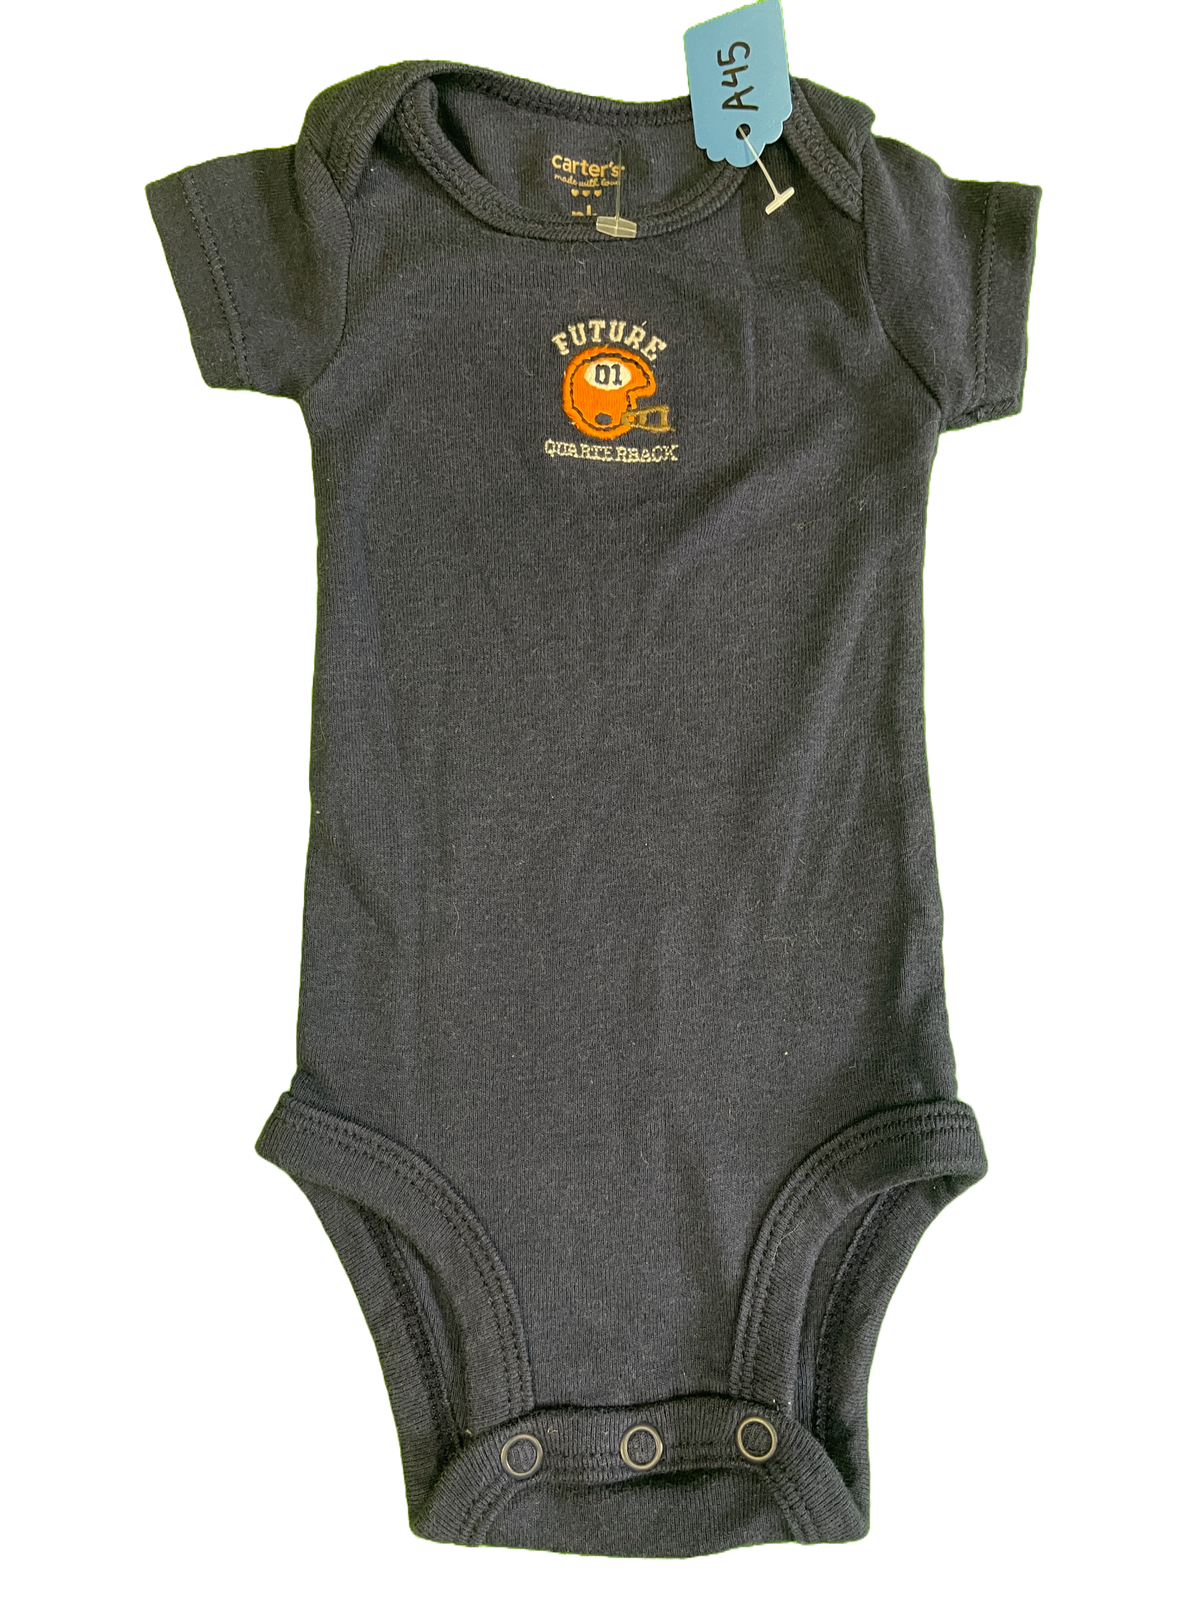 American Football "Future Quarterback" Bodysuit/Vest Infant Newborn